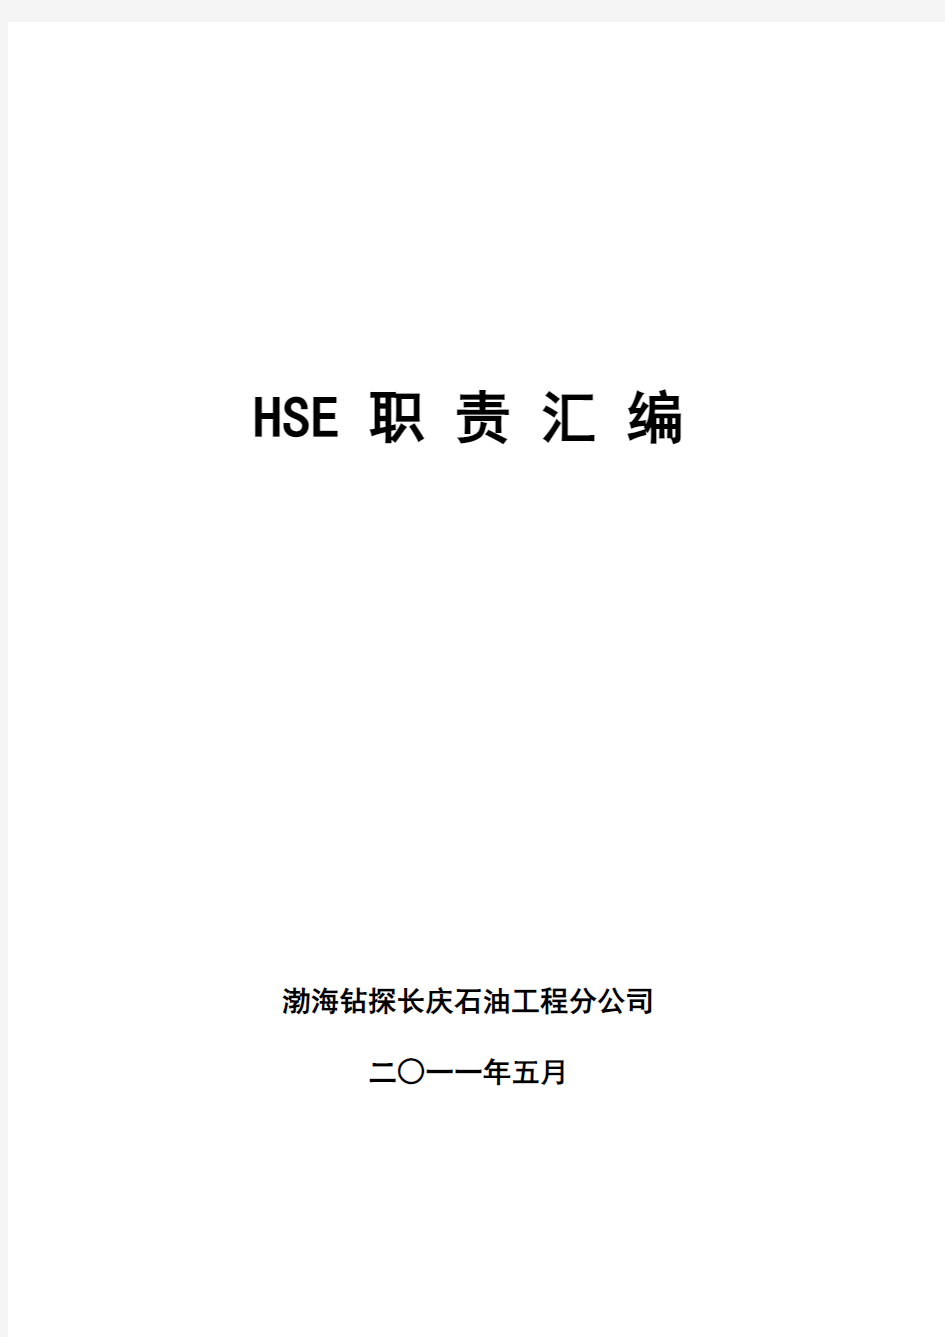 HSE职责汇编(doc 51页)